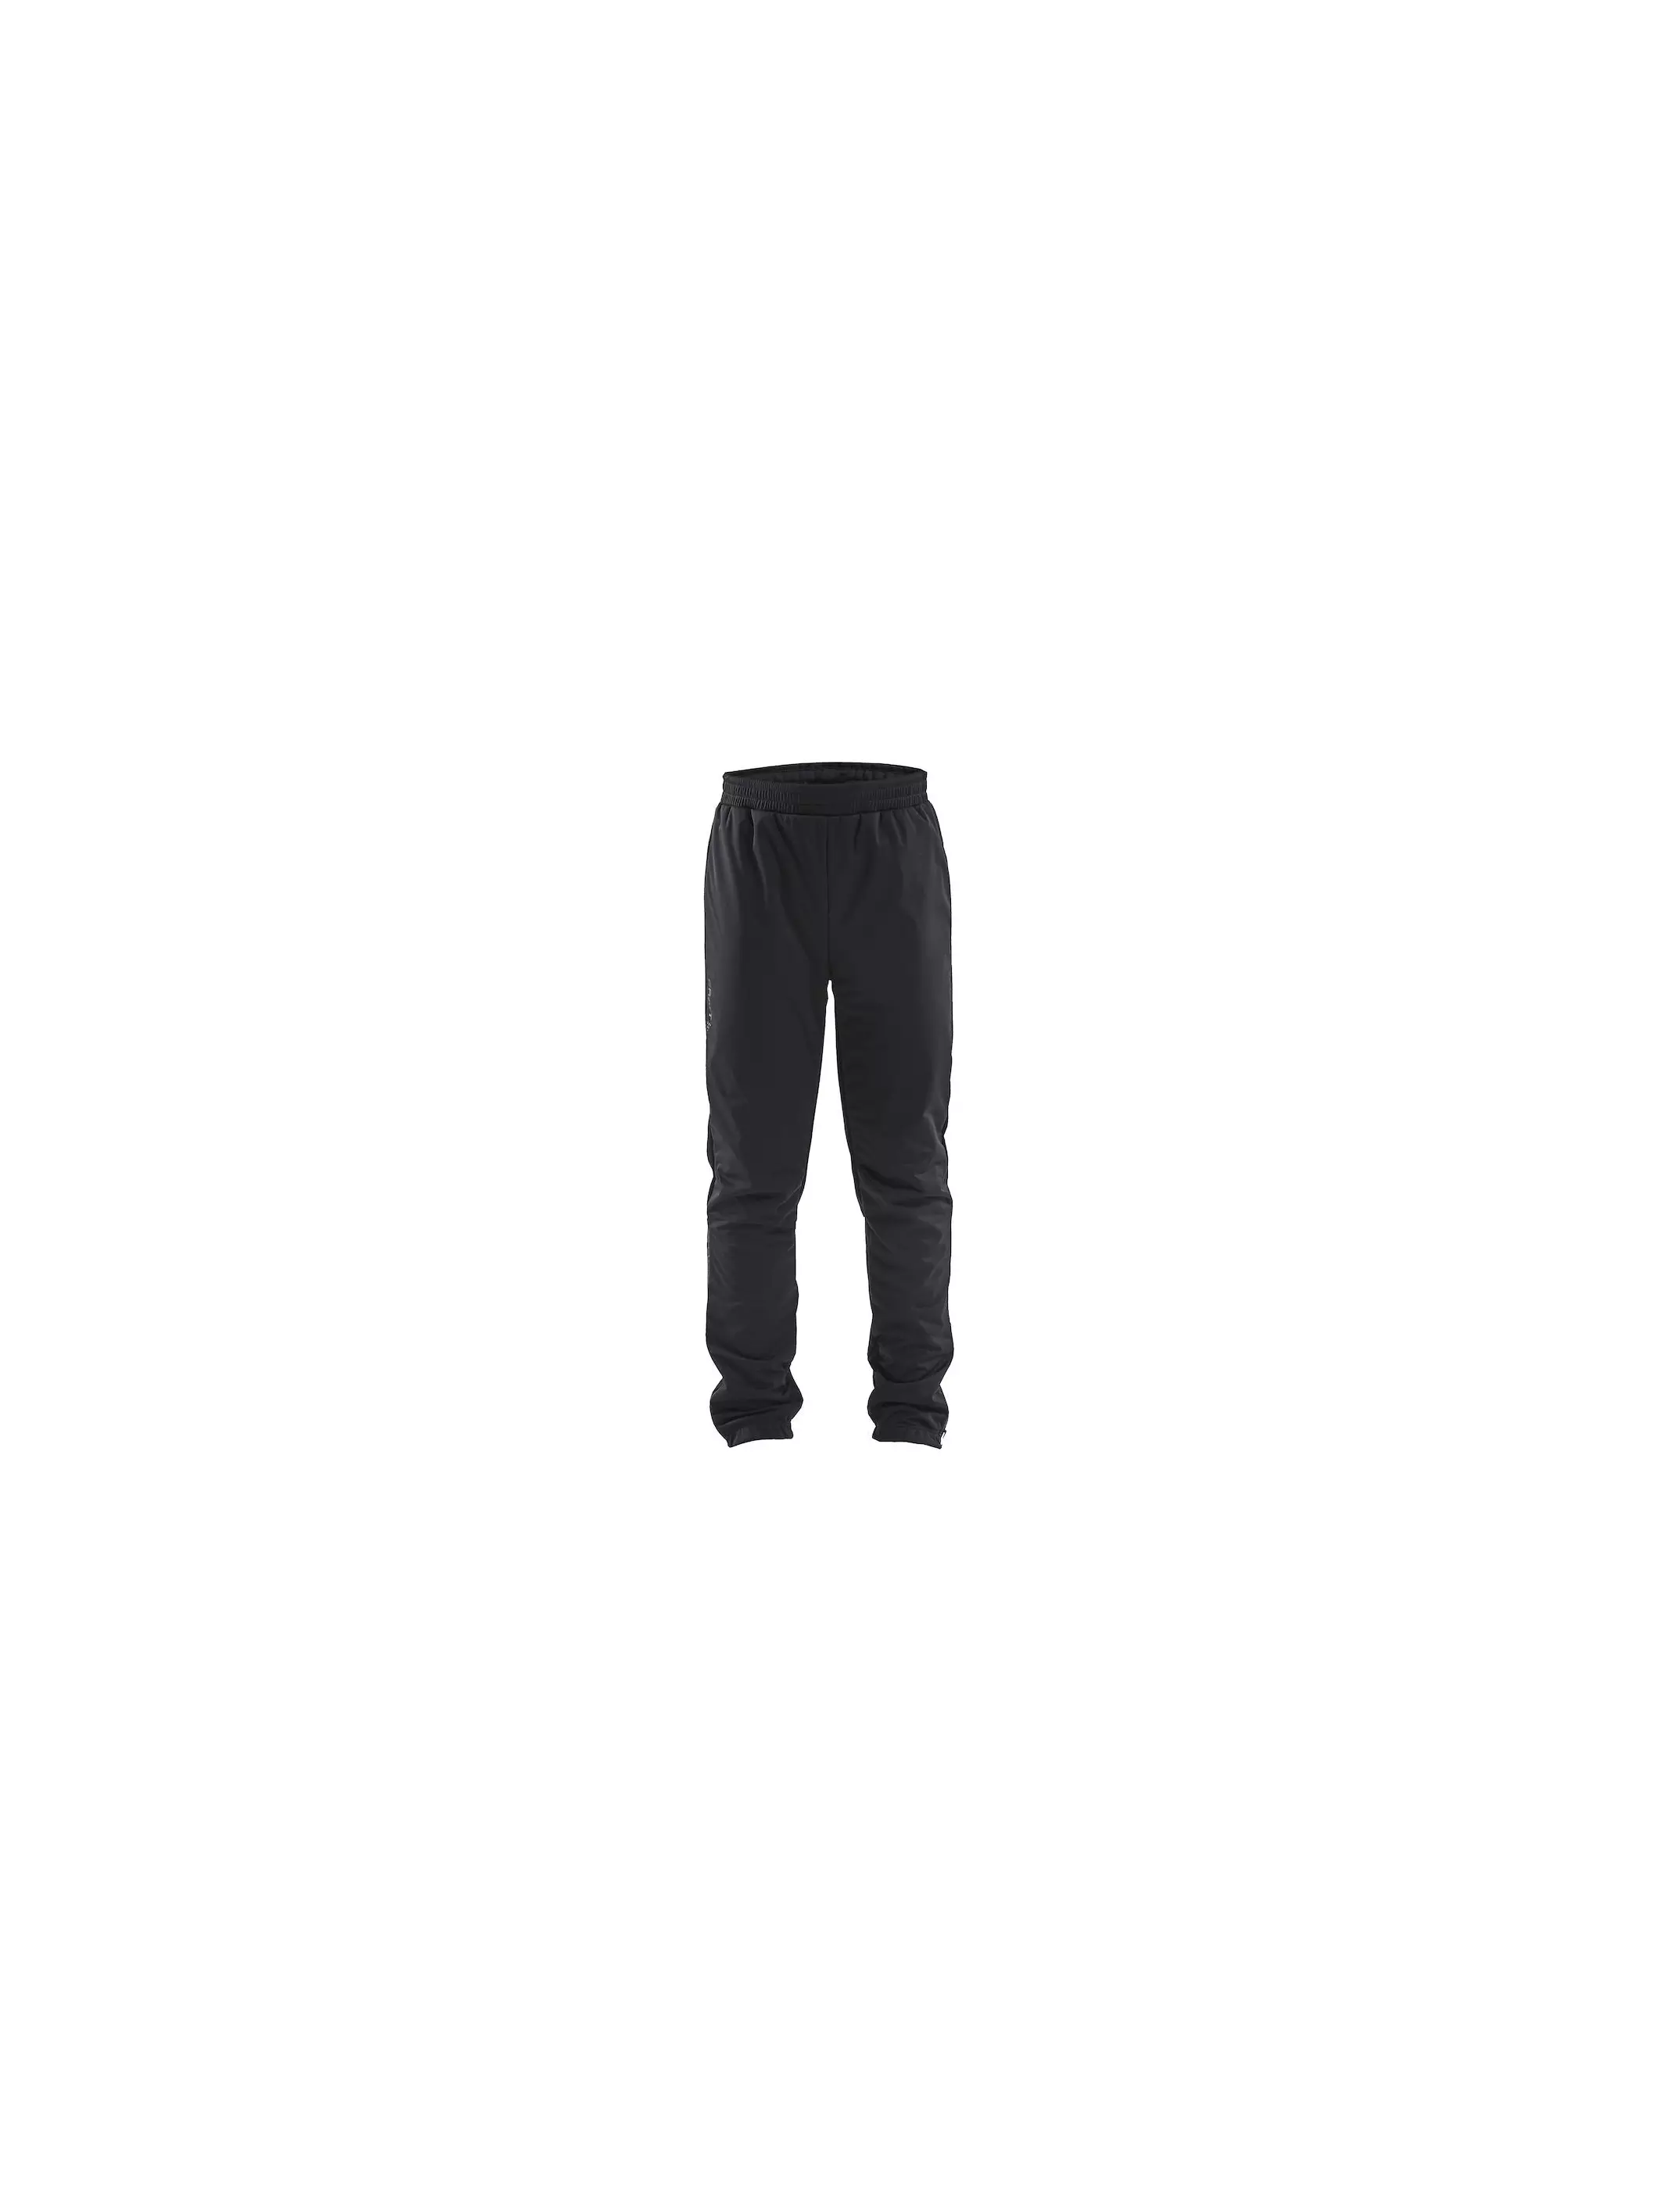 Pantalons & Collants Craft CORE WARM XC PANTS JR - 1909806